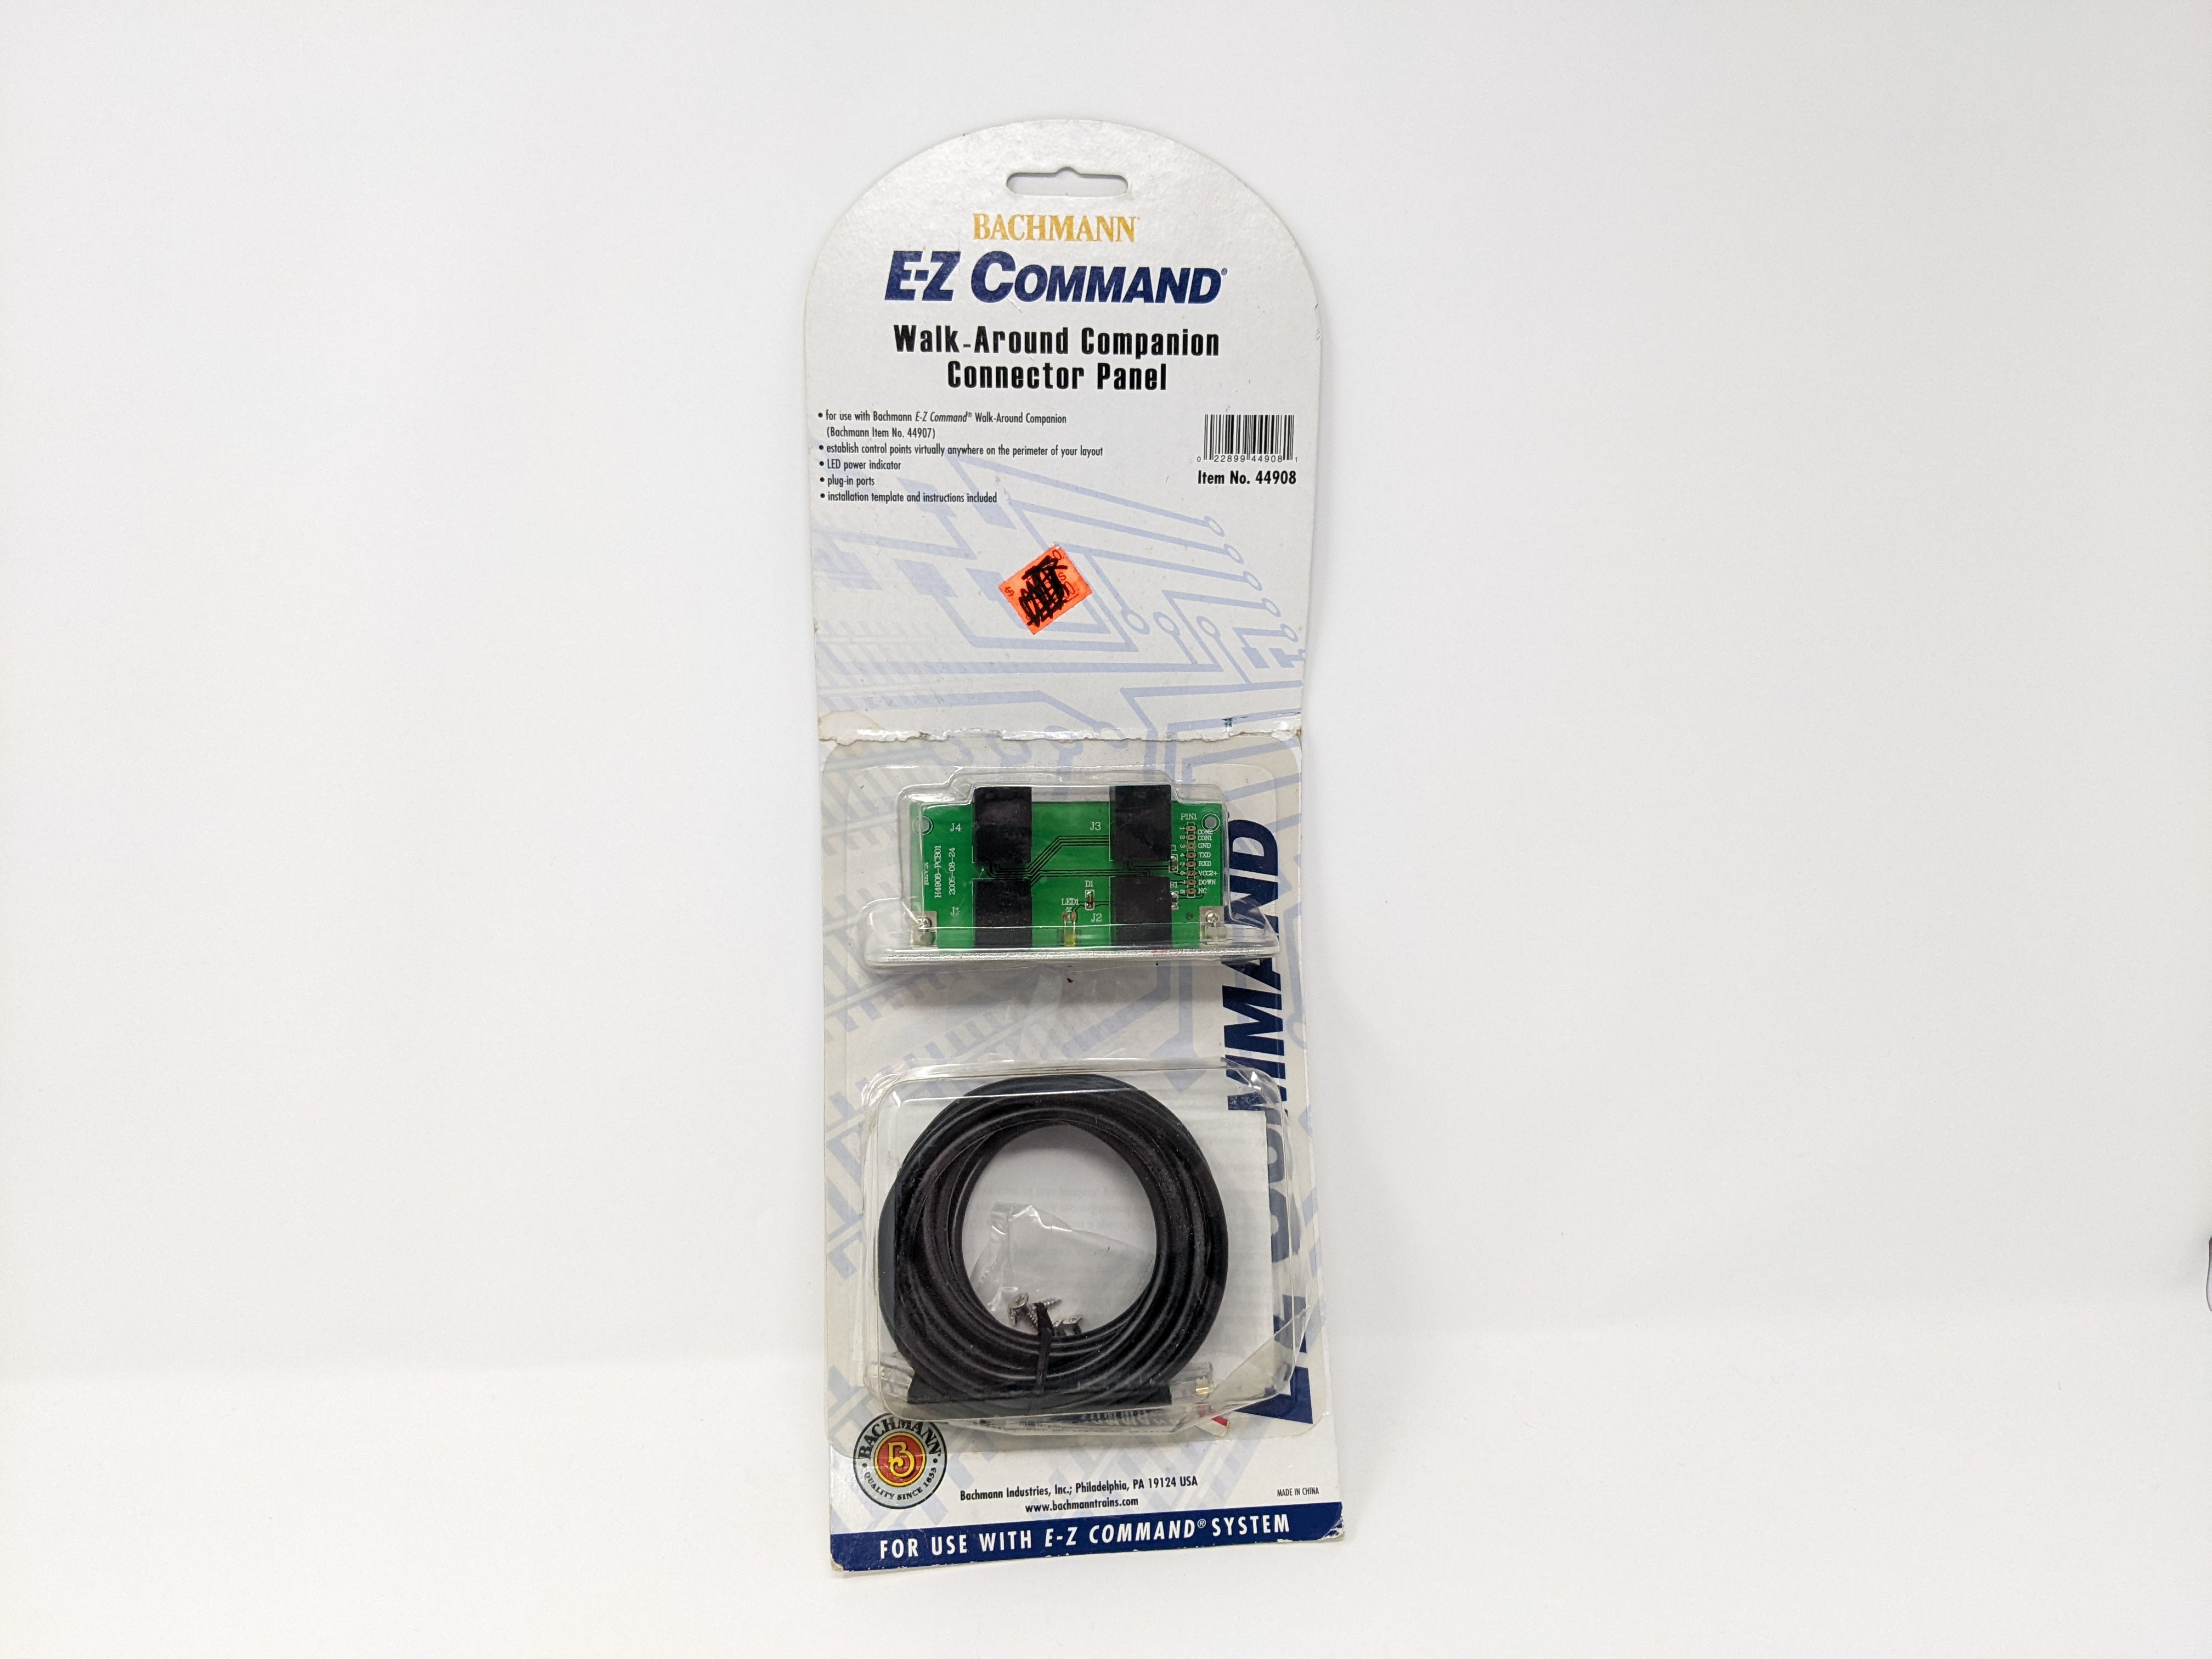 Bachmann 44908 HO Scale, E-Z Command Walk-Around Companion Connector Panel